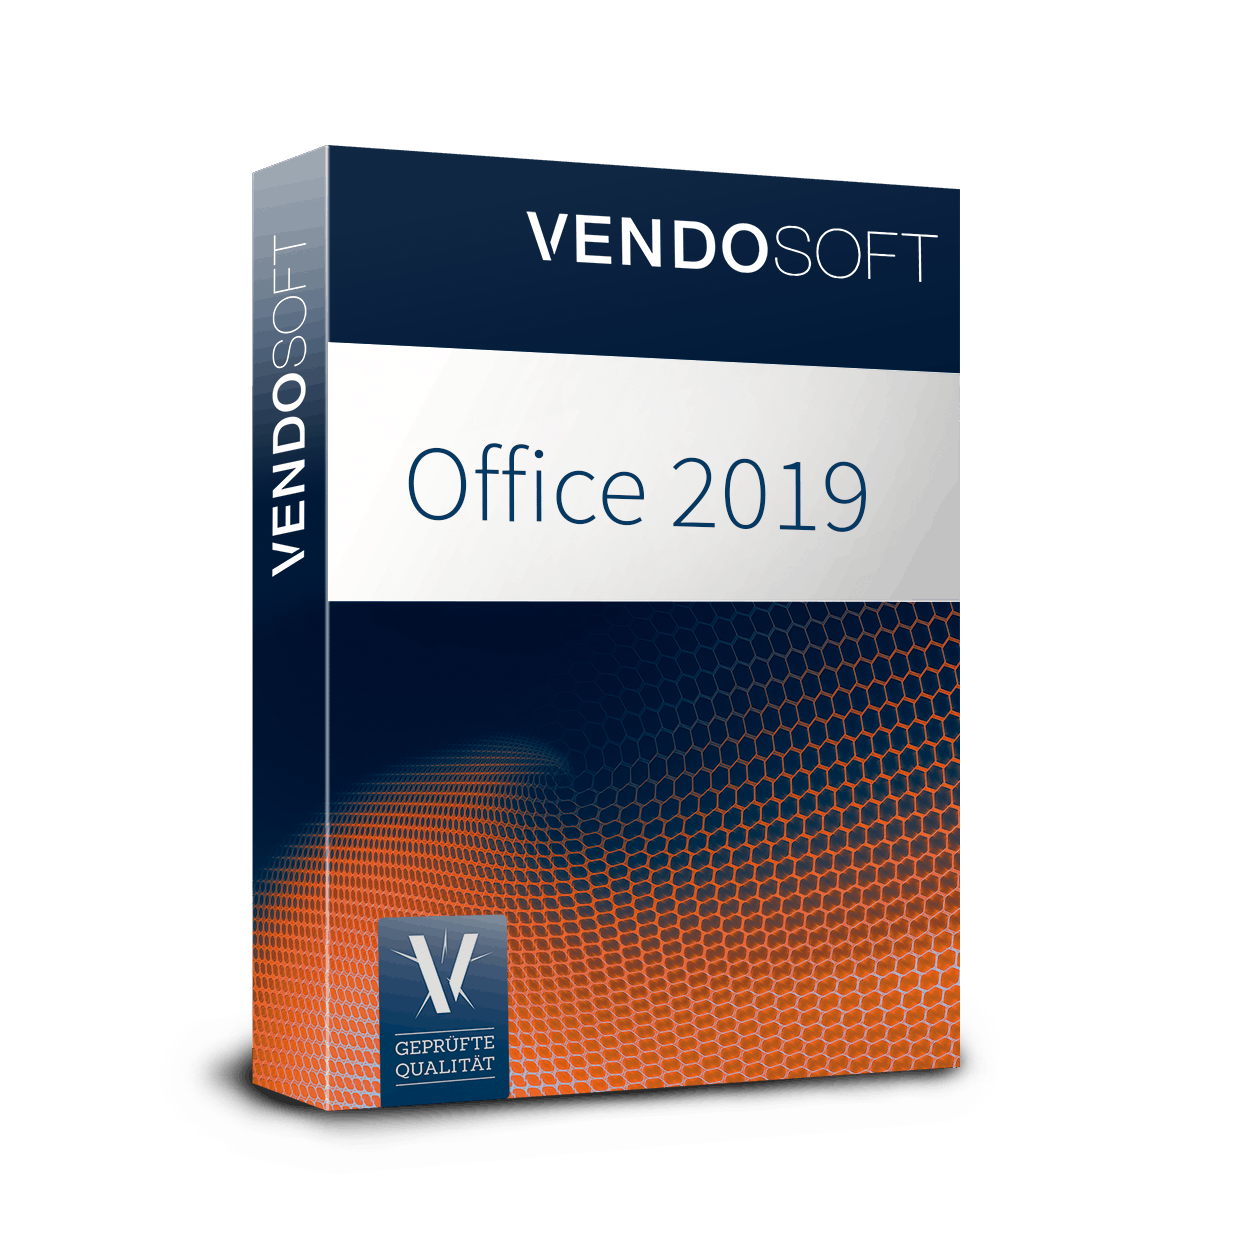 Microsoft-Office-2019_VENDOSOFT